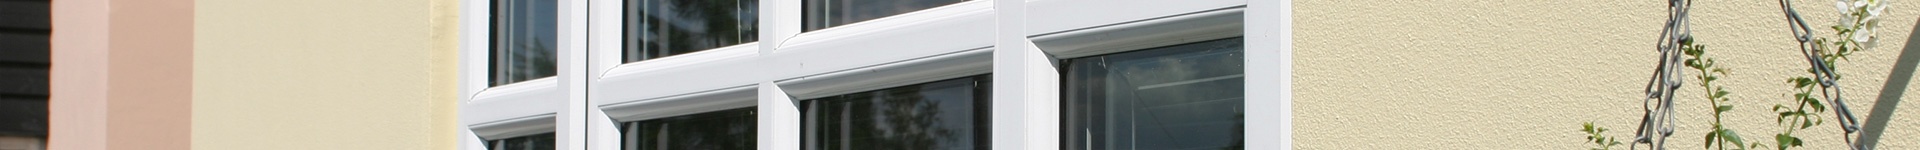 PVC_Windows - double glazing